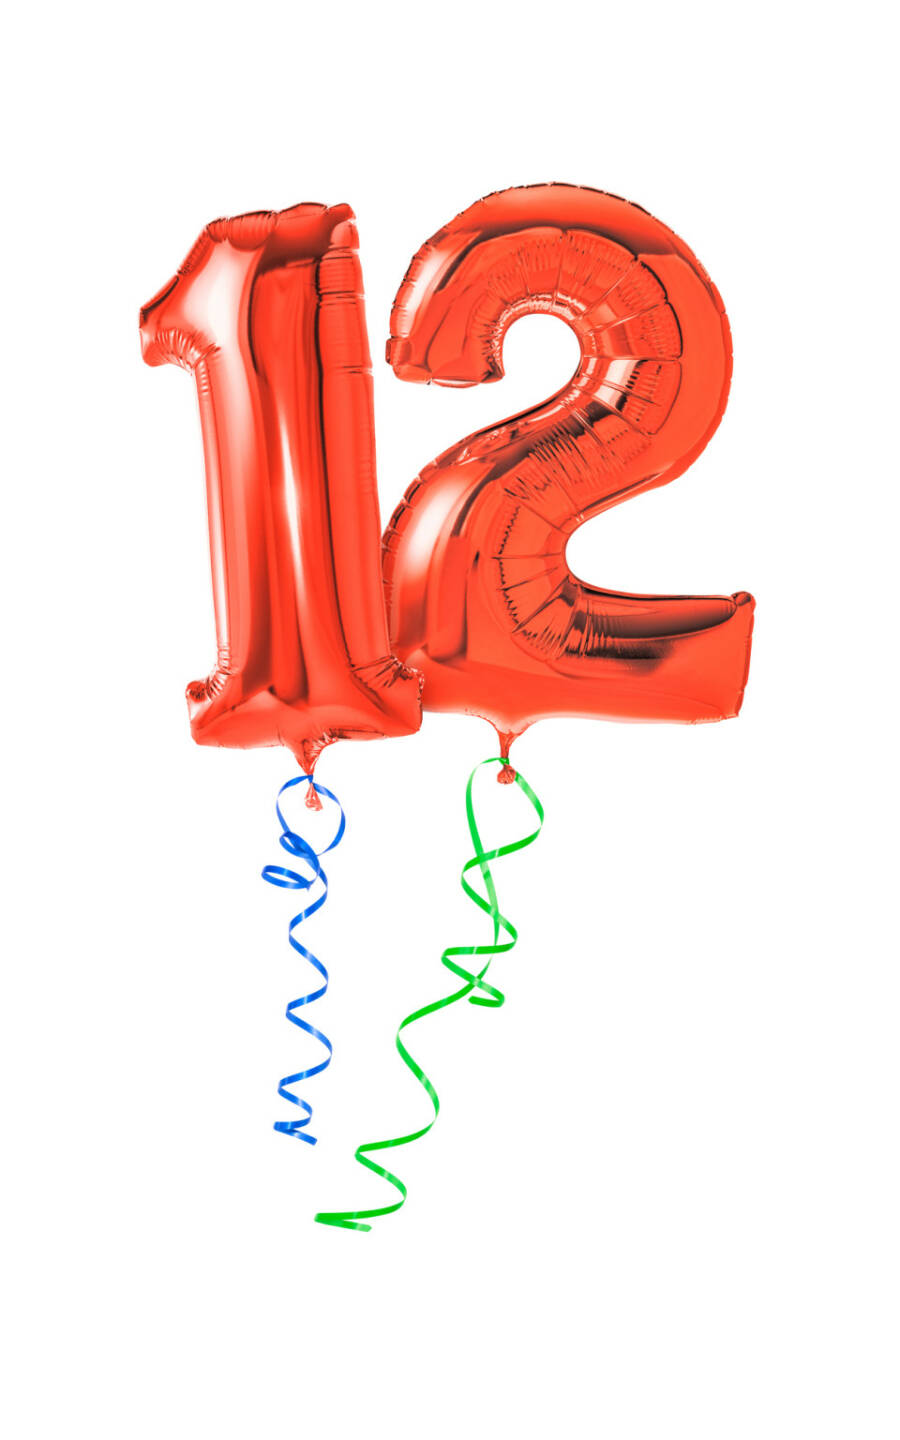 zwölf - 12 - https://de.depositphotos.com/58438111/stock-photo-red-balloons-with-ribbon.html